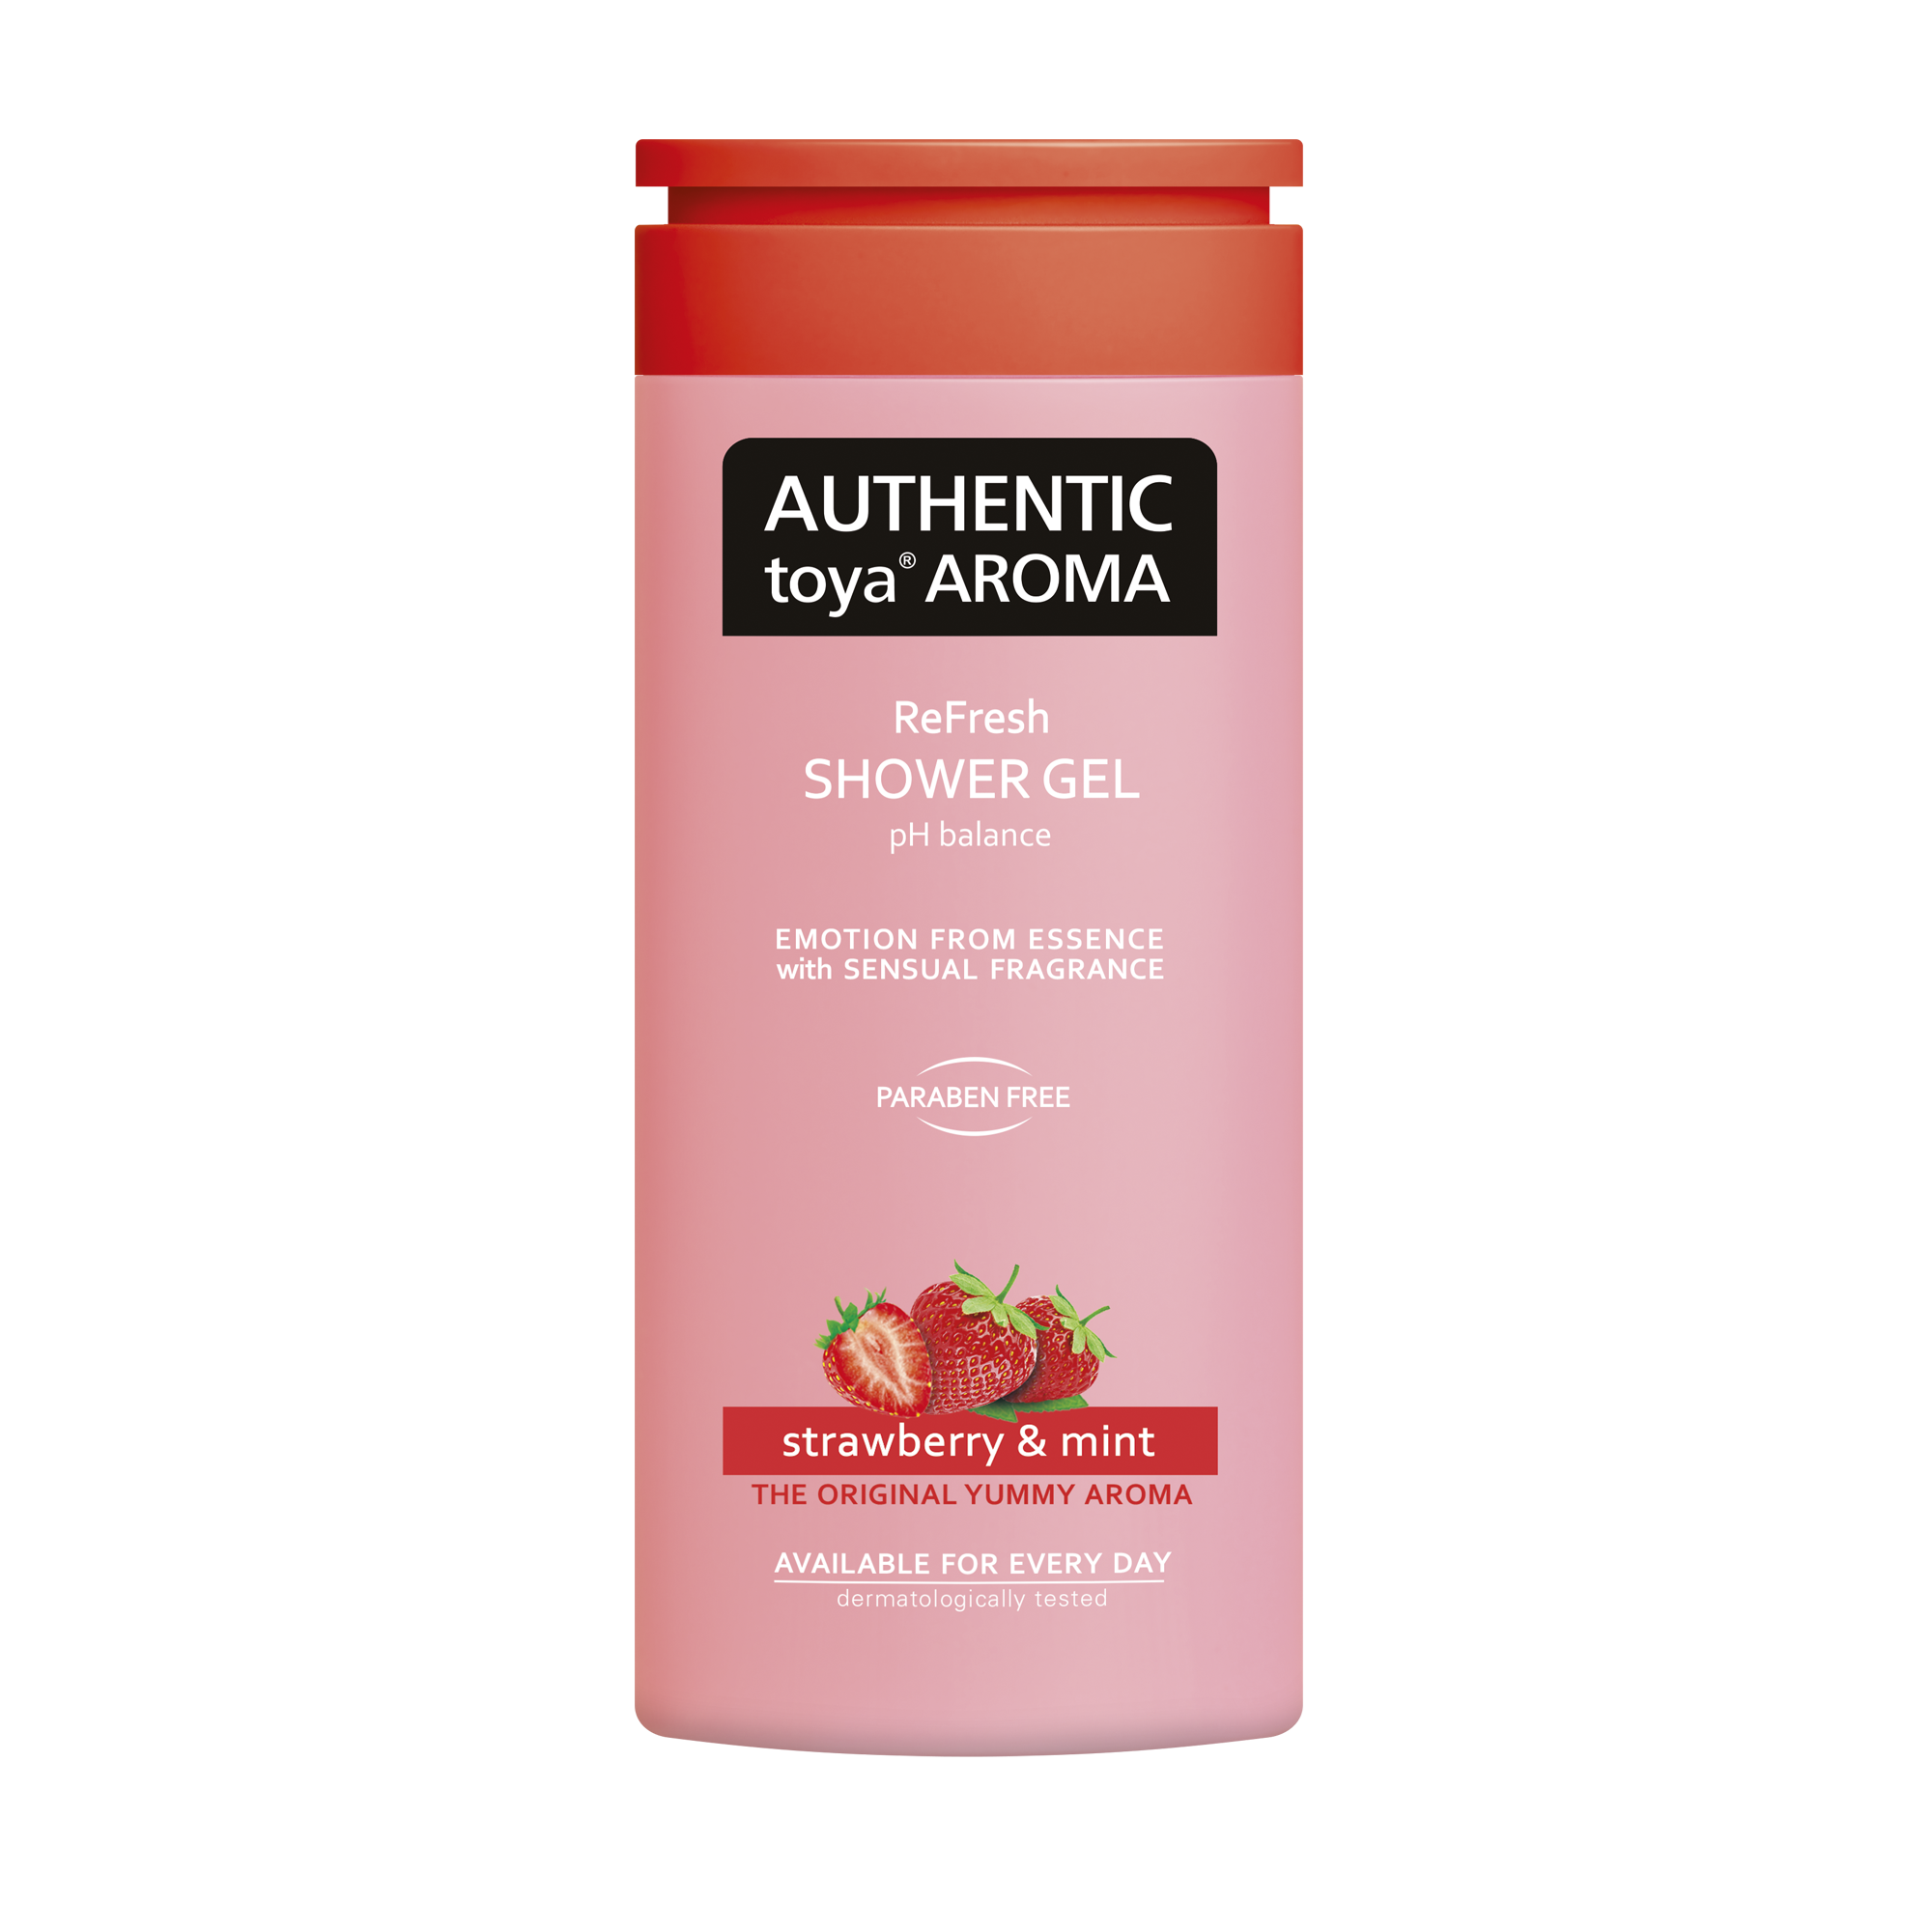 Authentic-toya-aroma-strawberry-mint